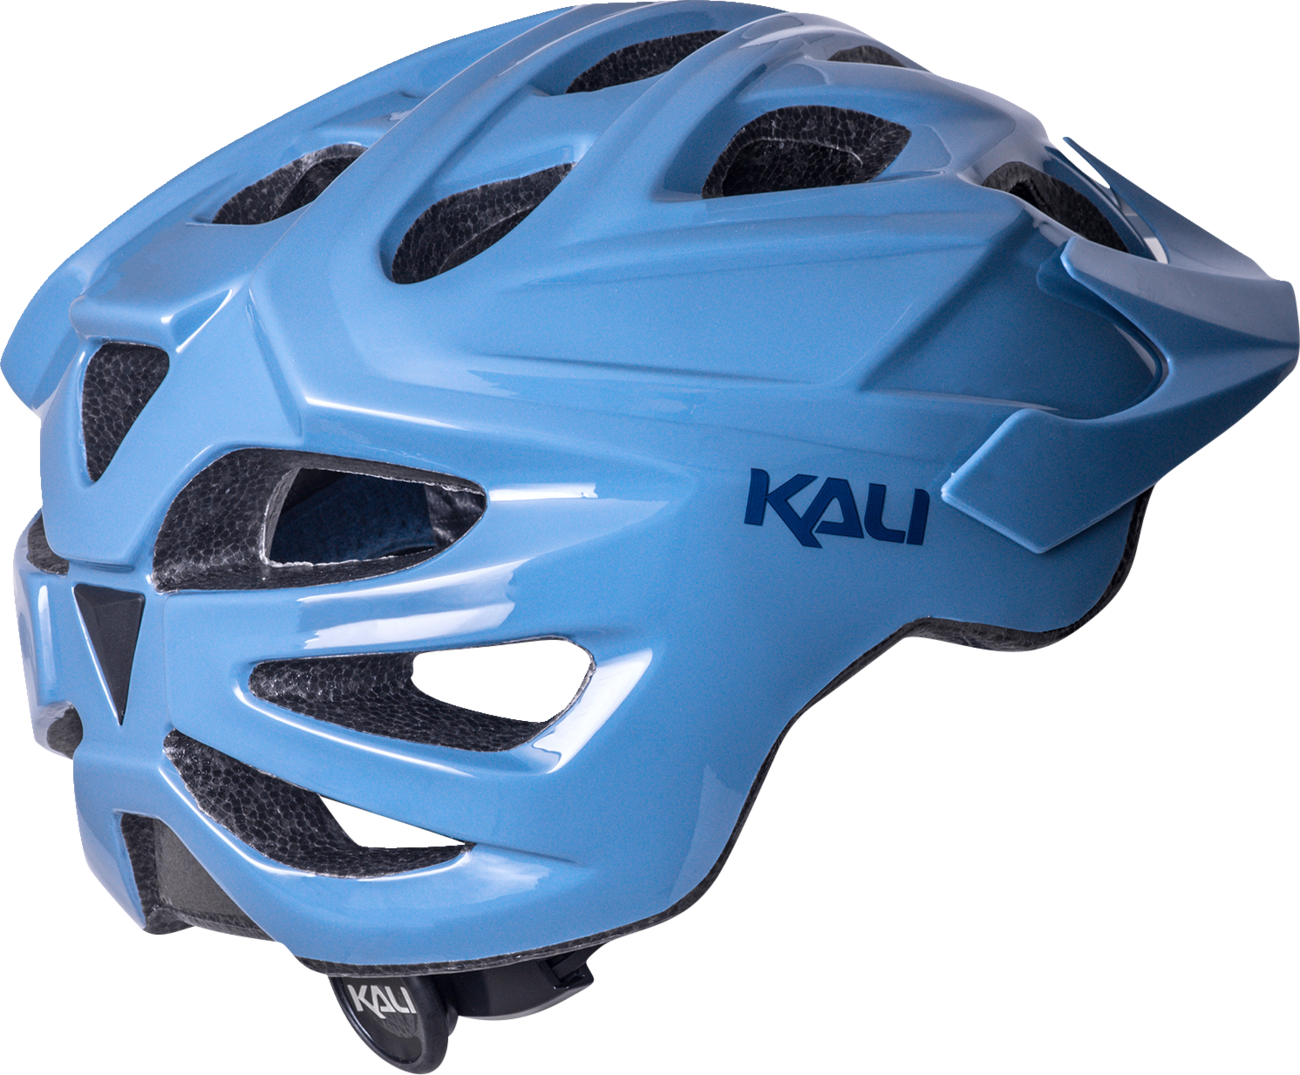 KALI Chakra Solo Helmet - Thunder Blue - S/M 0221221126